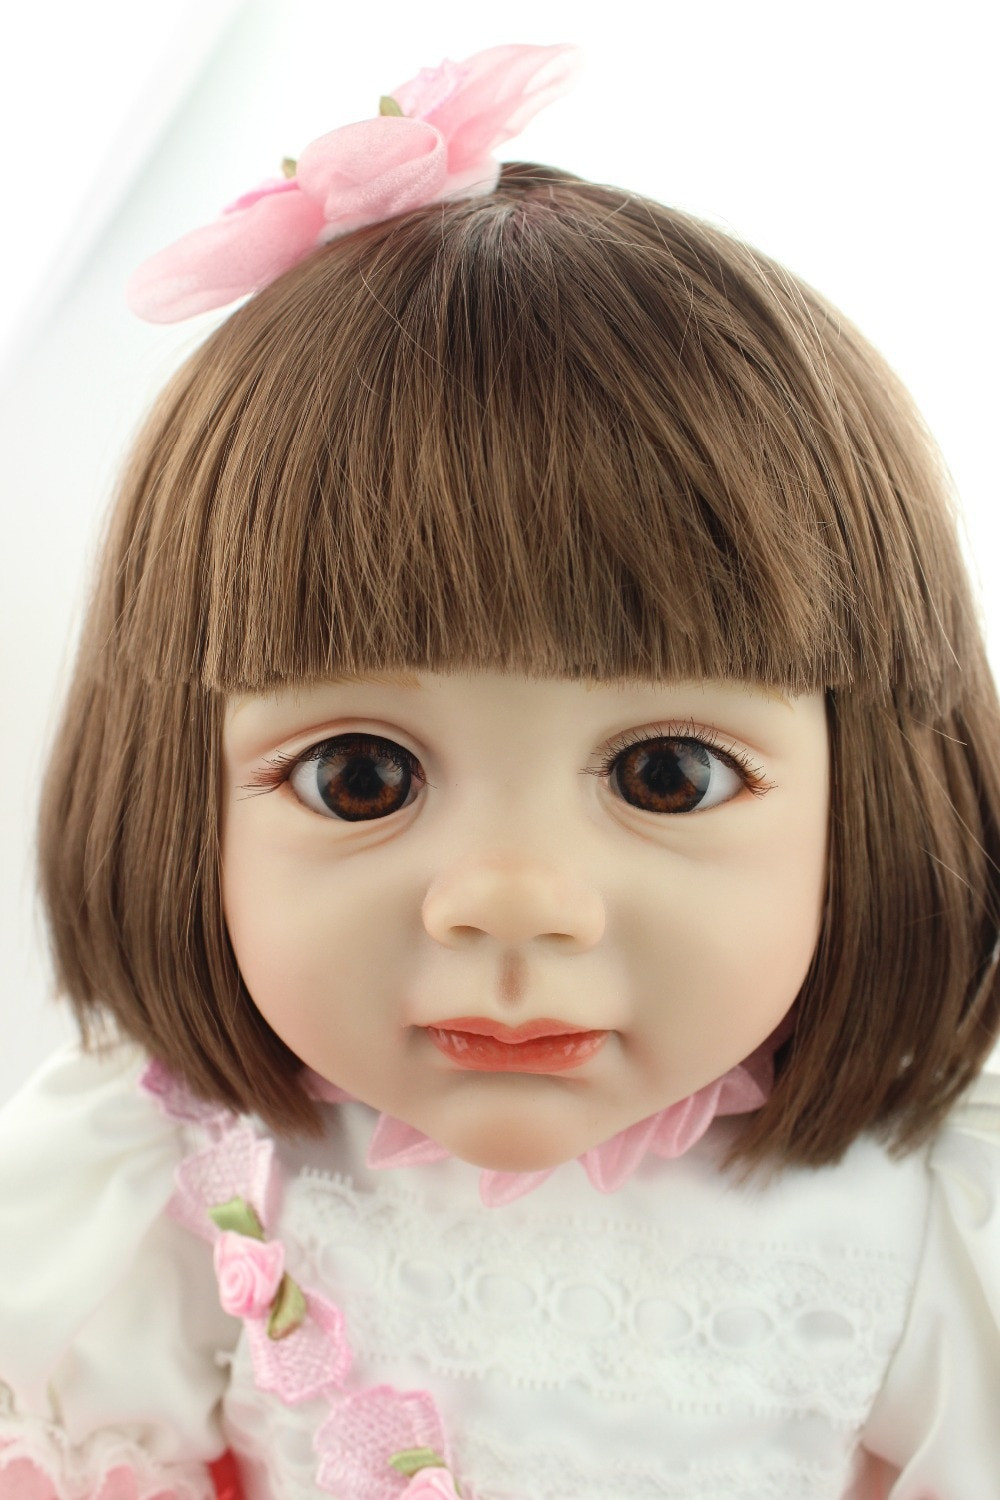 Newborn Baby Dolls With Hair
 Aliexpress Buy 2015 new design 24inch Reborn Toddler